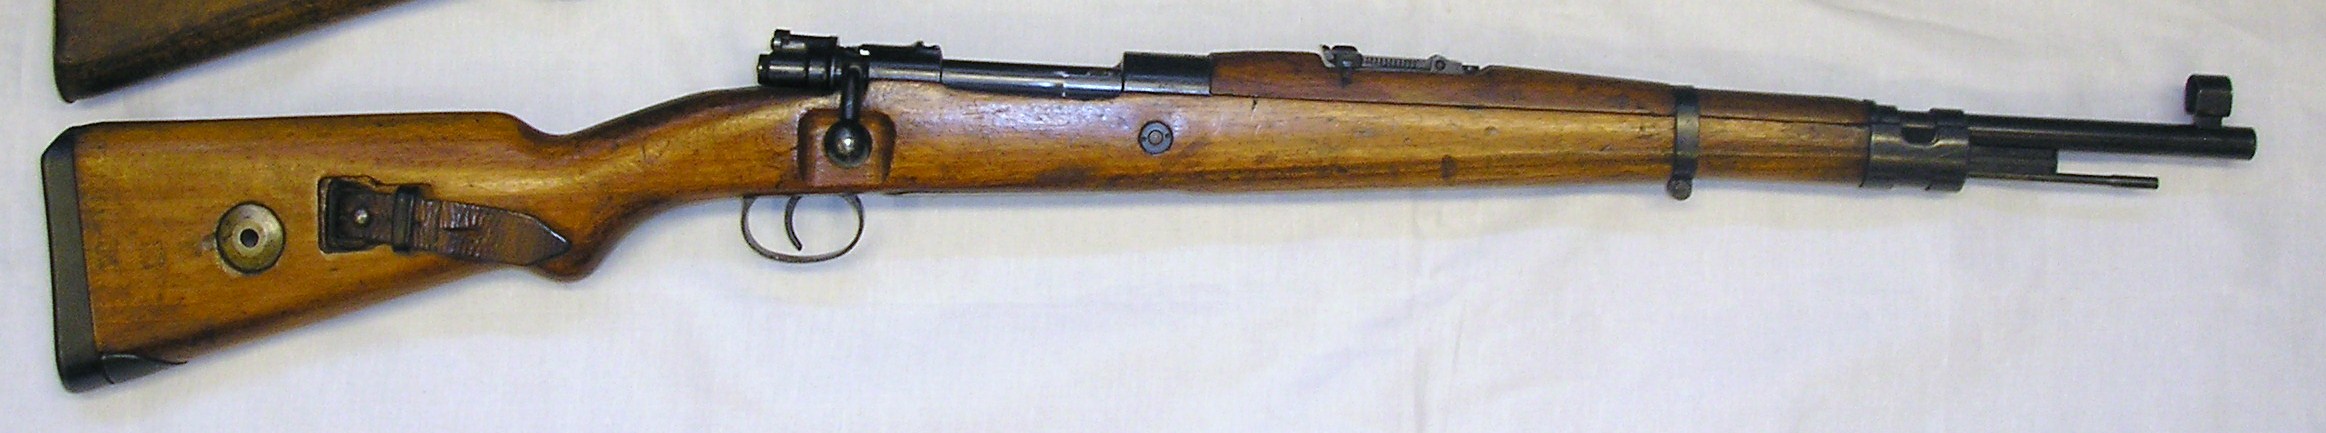 ./guns/rifle/bilder/Rifle-Kongsberg-Mauser-G3340-POLITI-1649-1.JPG